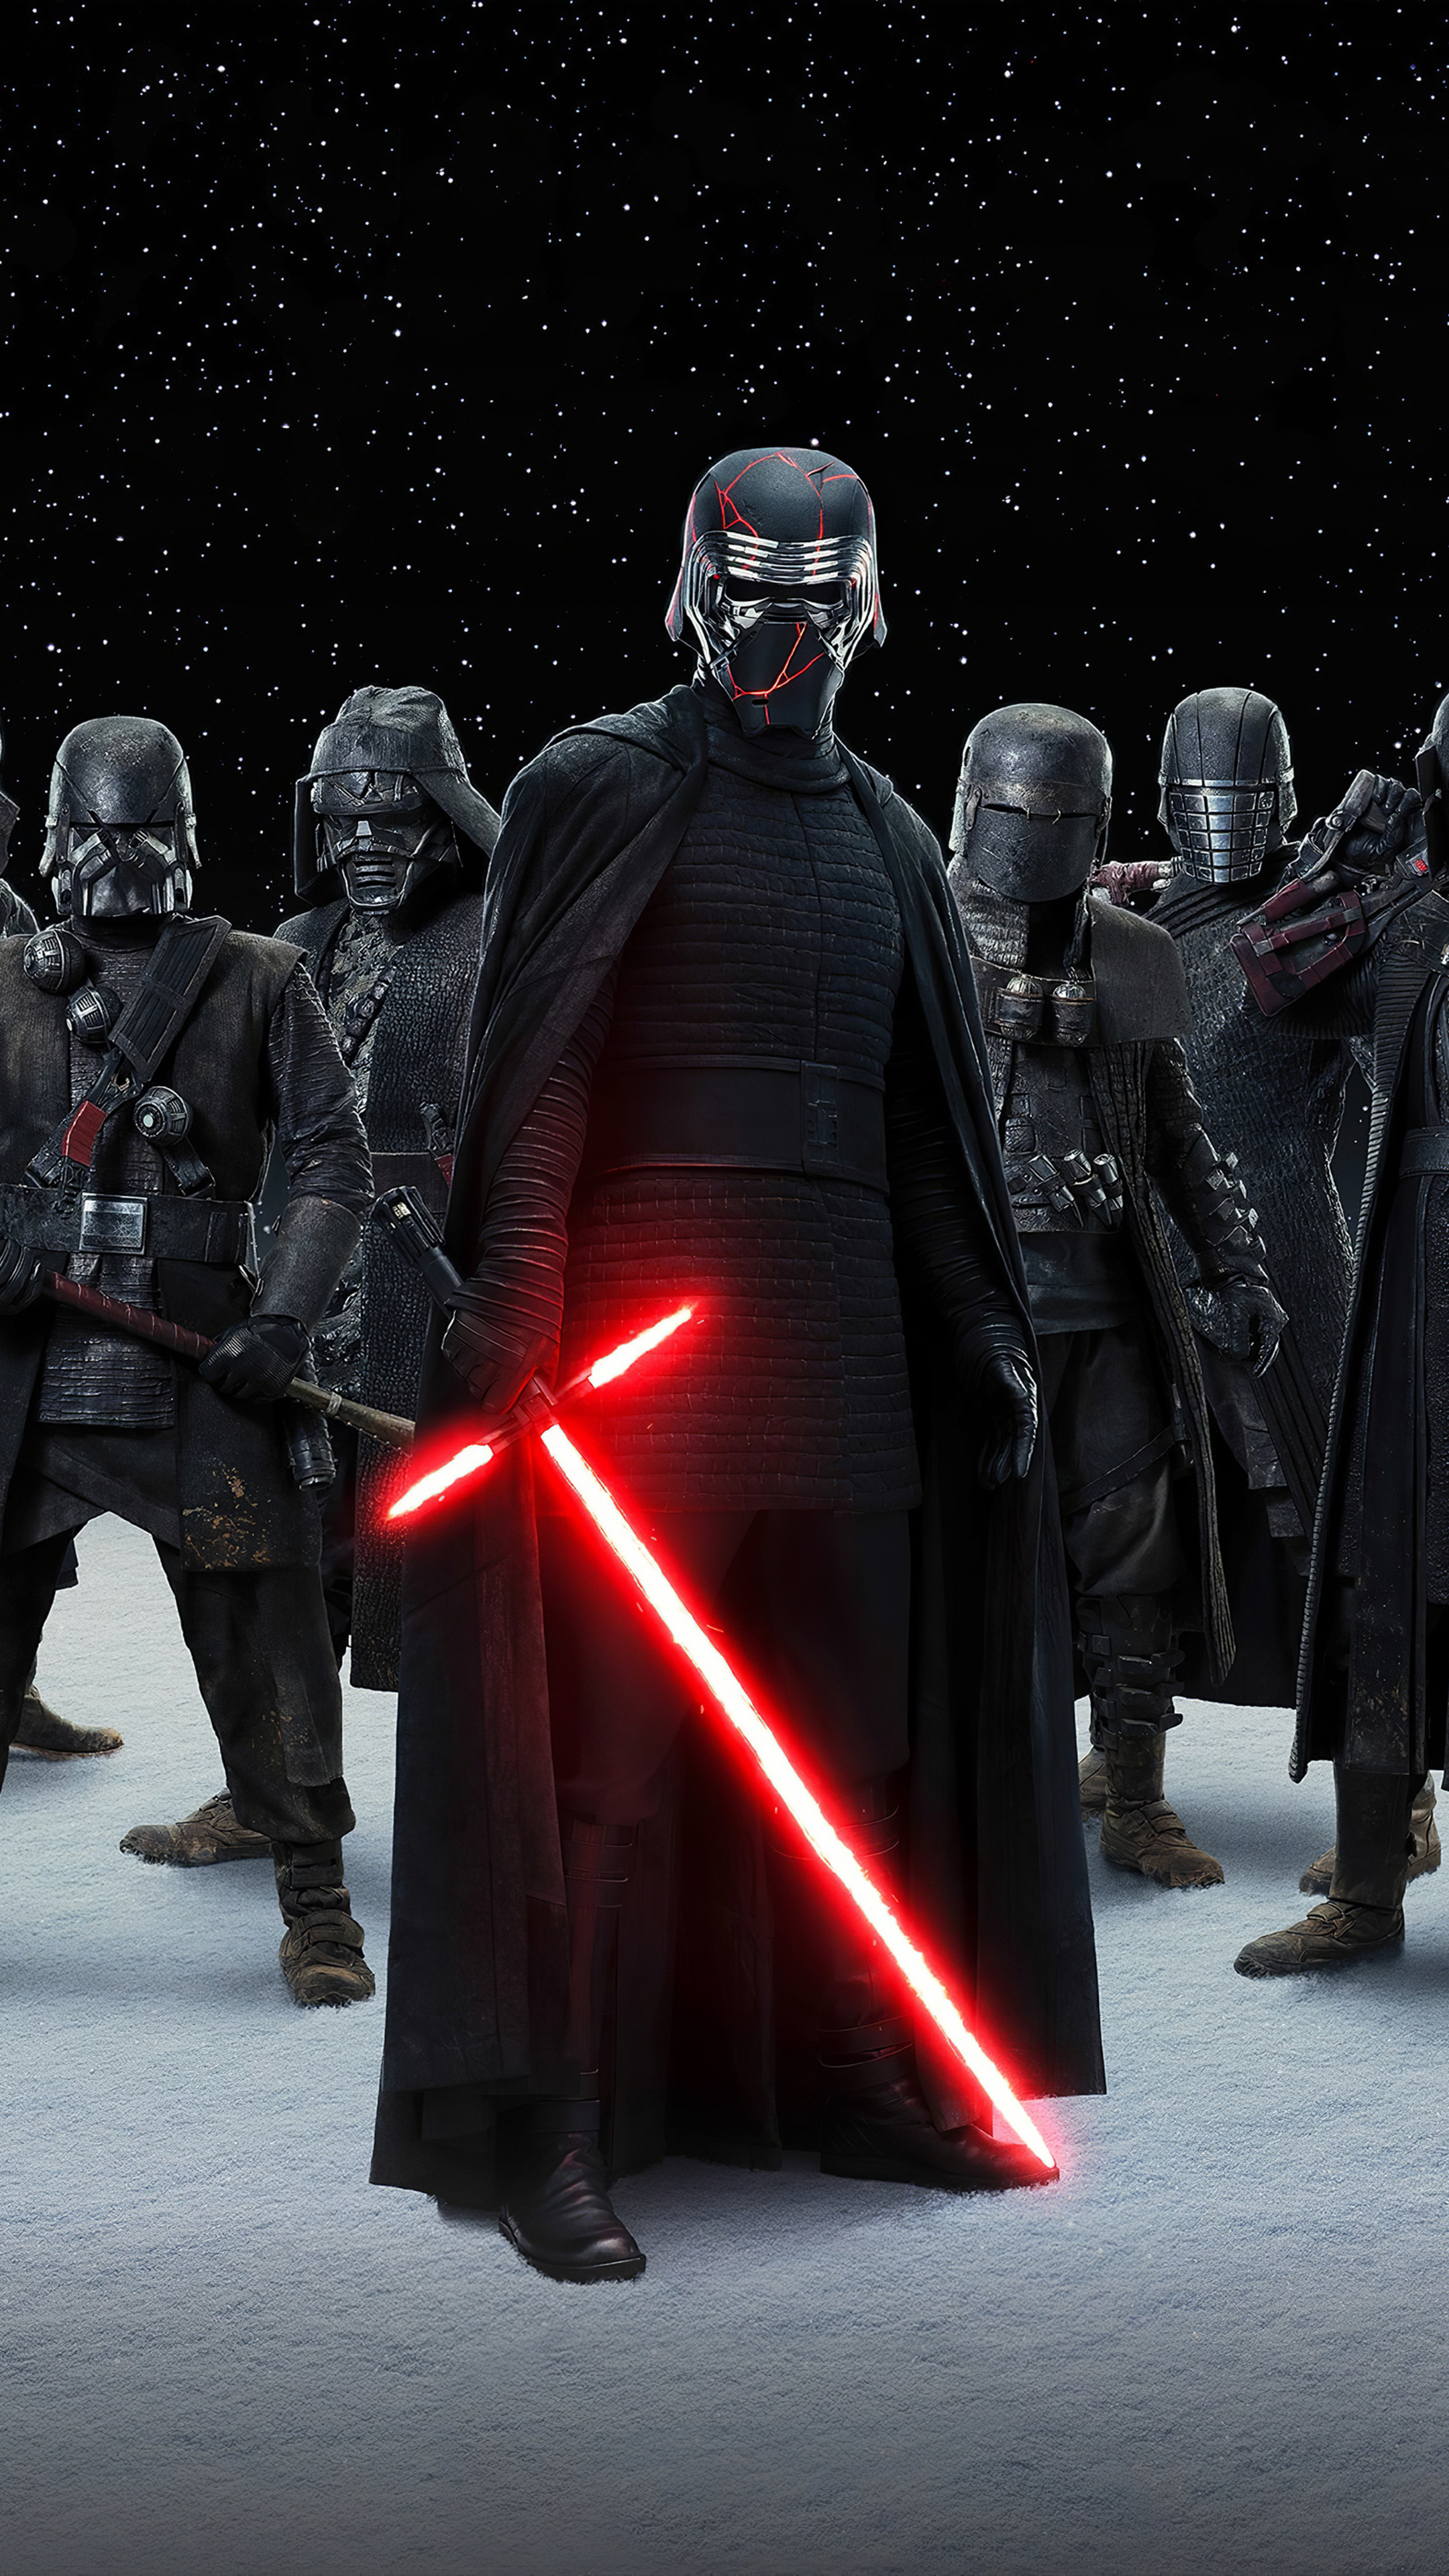 Star Wars: The Rise Of Skywalker: The final episode of the nine-part "Skywalker saga". 2160x3840 4K Wallpaper.